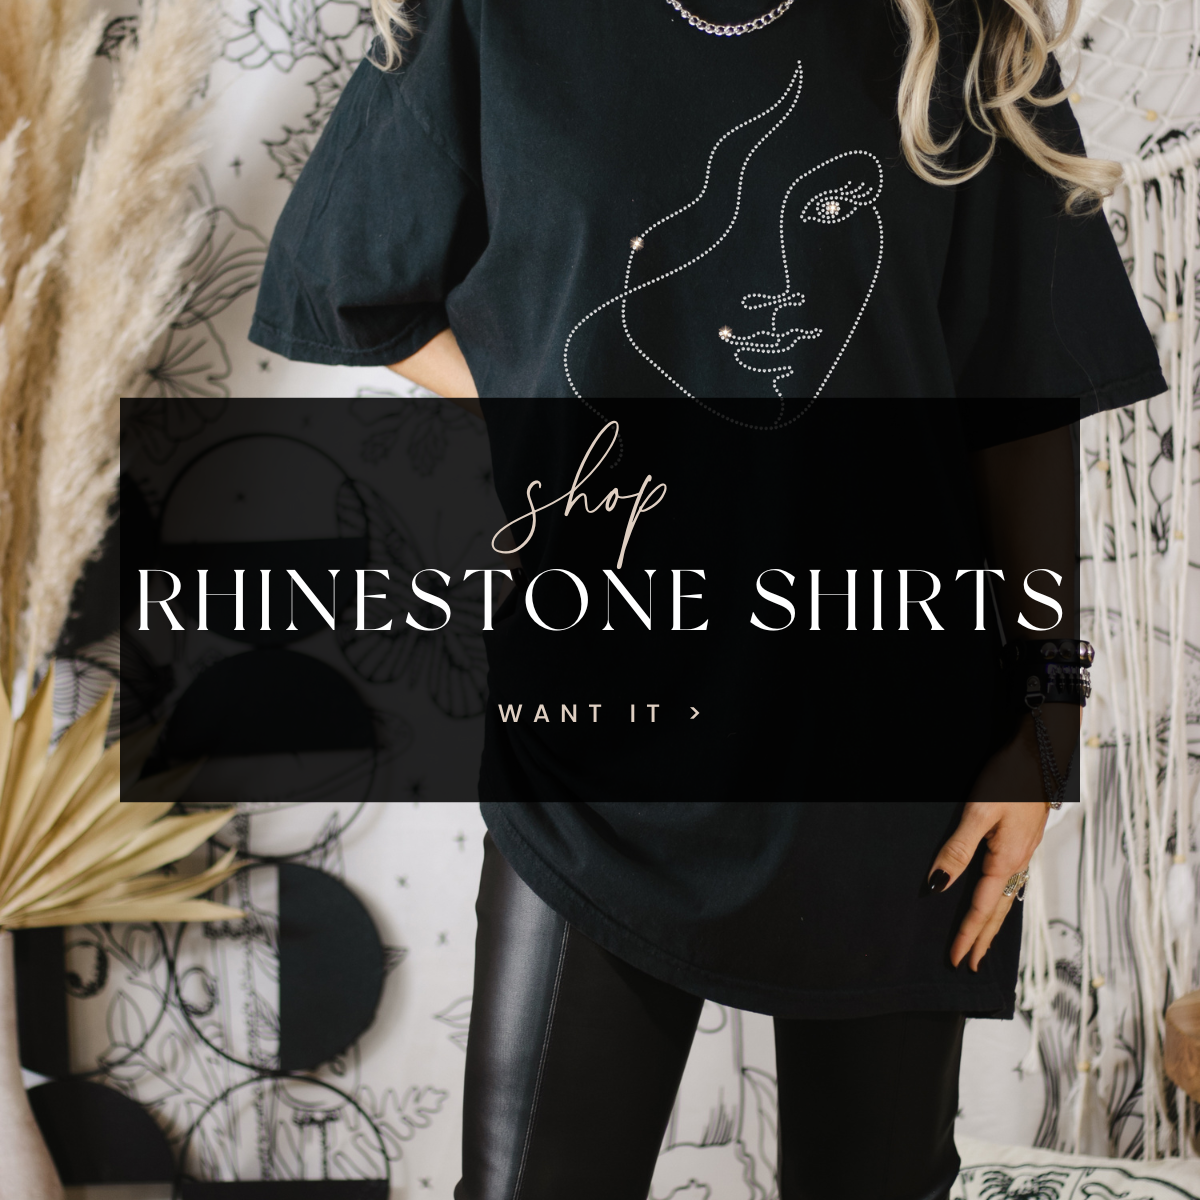 Rhinestone Shirts